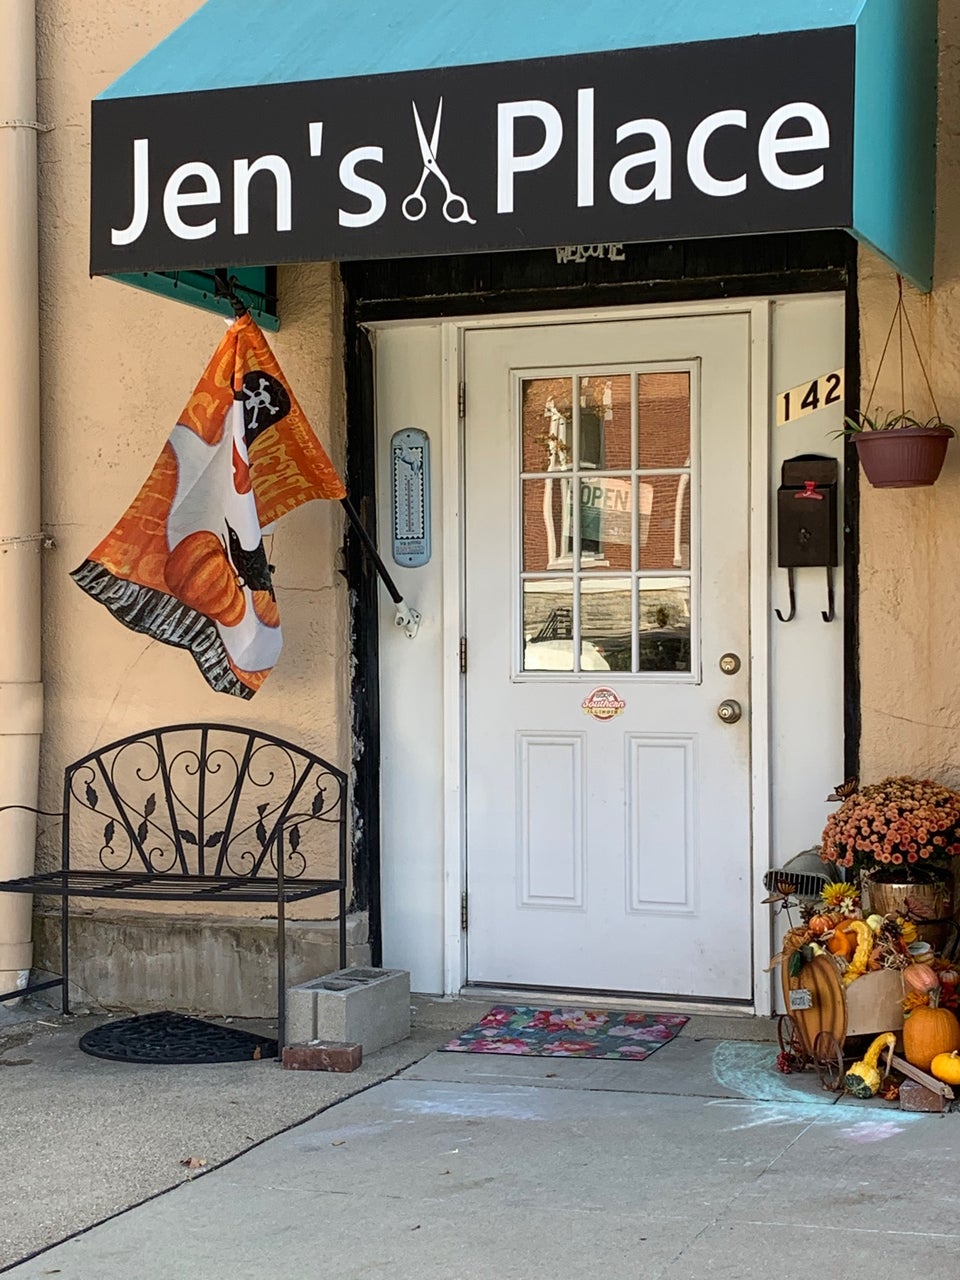 Jen's Place 142 NE Court St, Nashville Illinois 62263